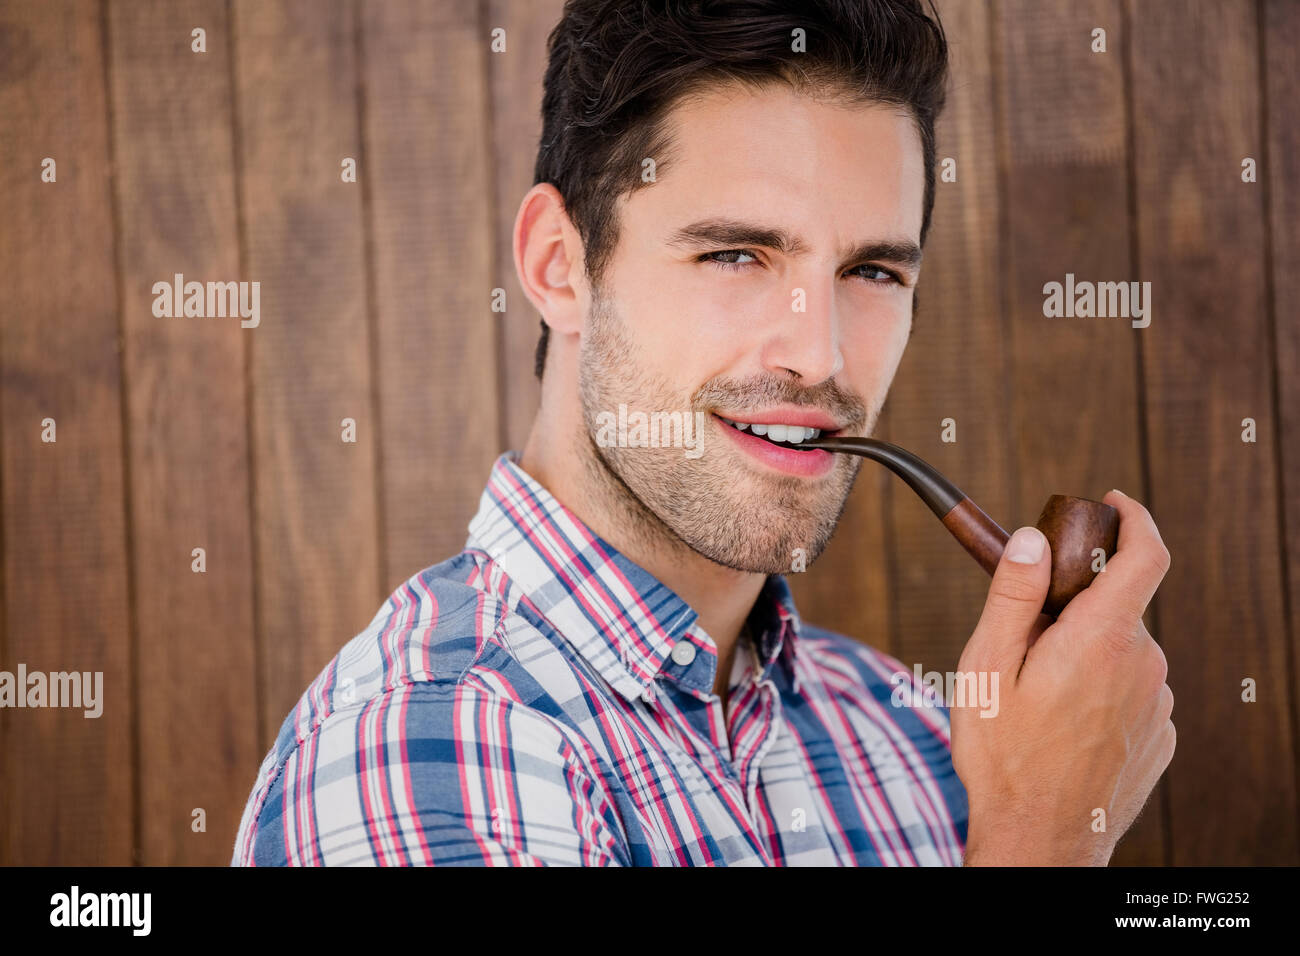 Young man smoking pipe Stock Photo